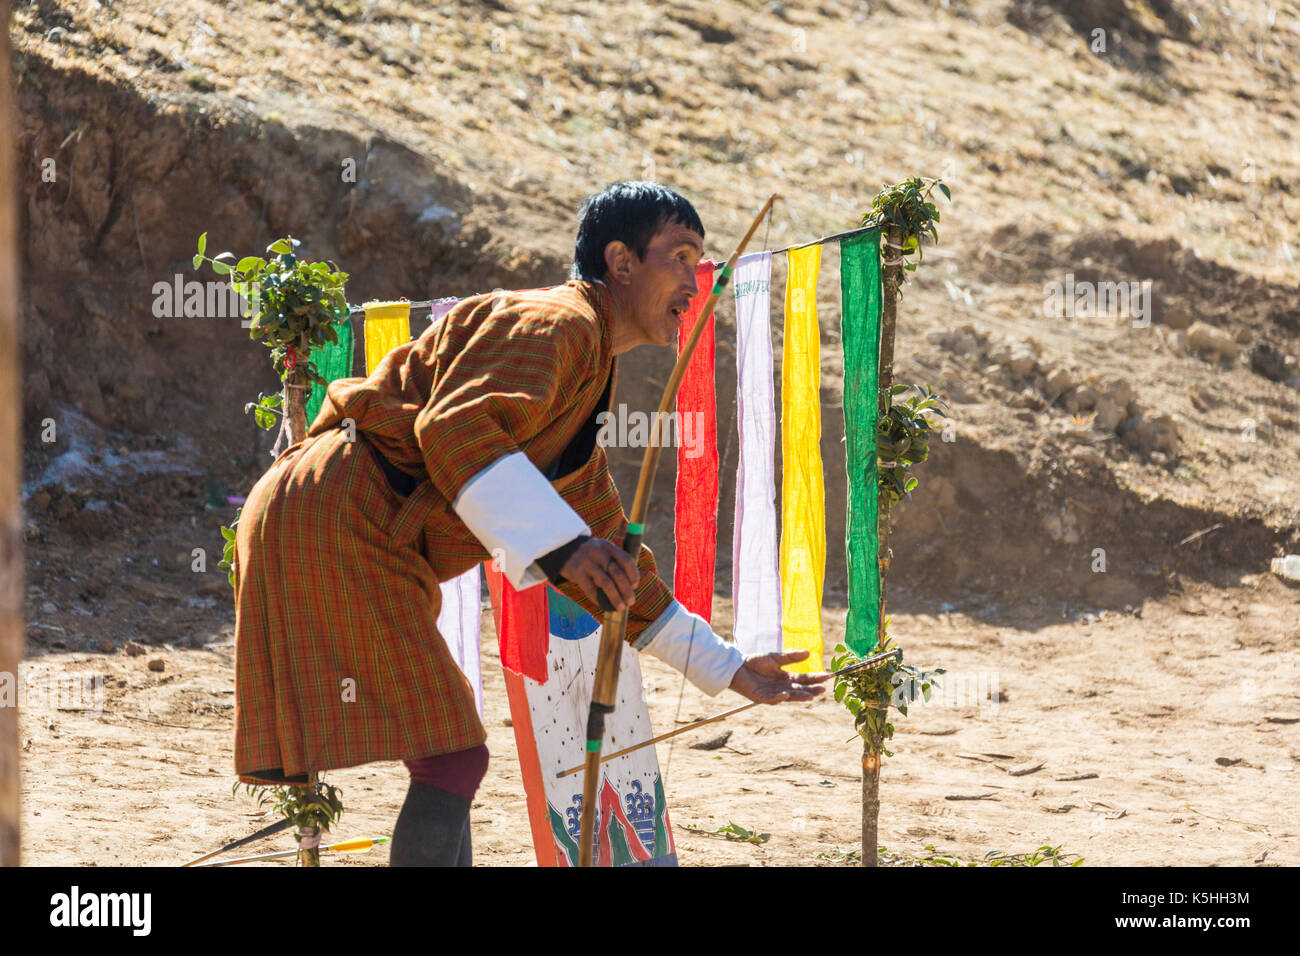 Valle de Phobjikha, Bhután occidental - Febrero 22, 2015: local en el valle de Phobjikha competiion arquería, tiro con arco es el deporte nacional de Bhután. Foto de stock